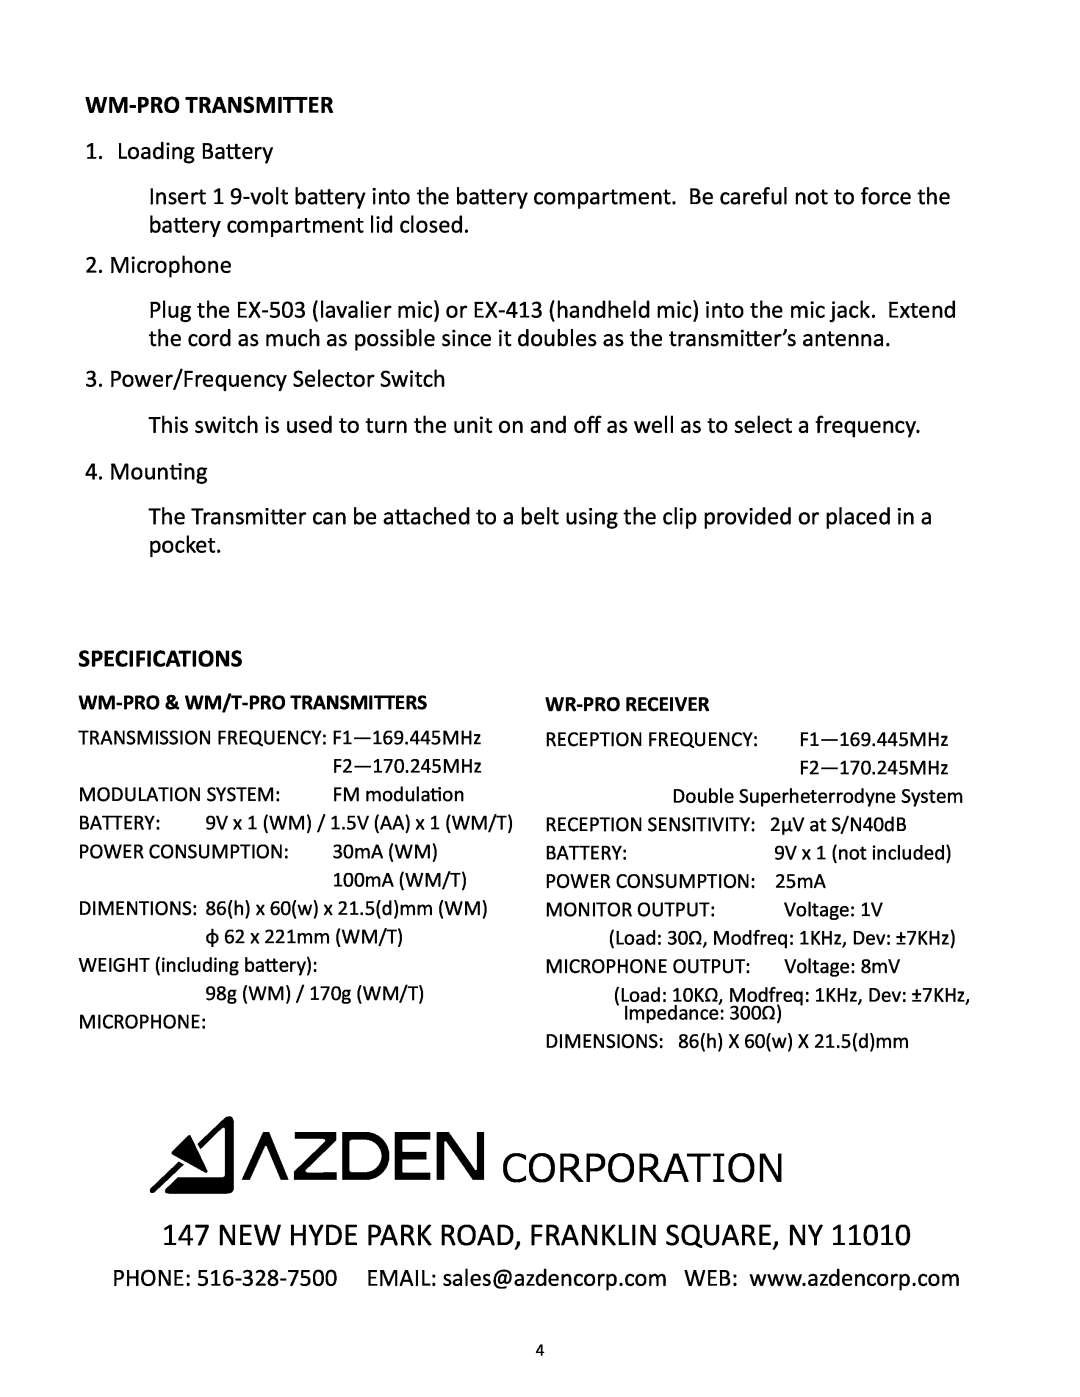 Azden WLTPRO instruction manual Specifications, Corporation, New Hyde Park Road, Franklin Square, Ny, Wm-Protransmitter 